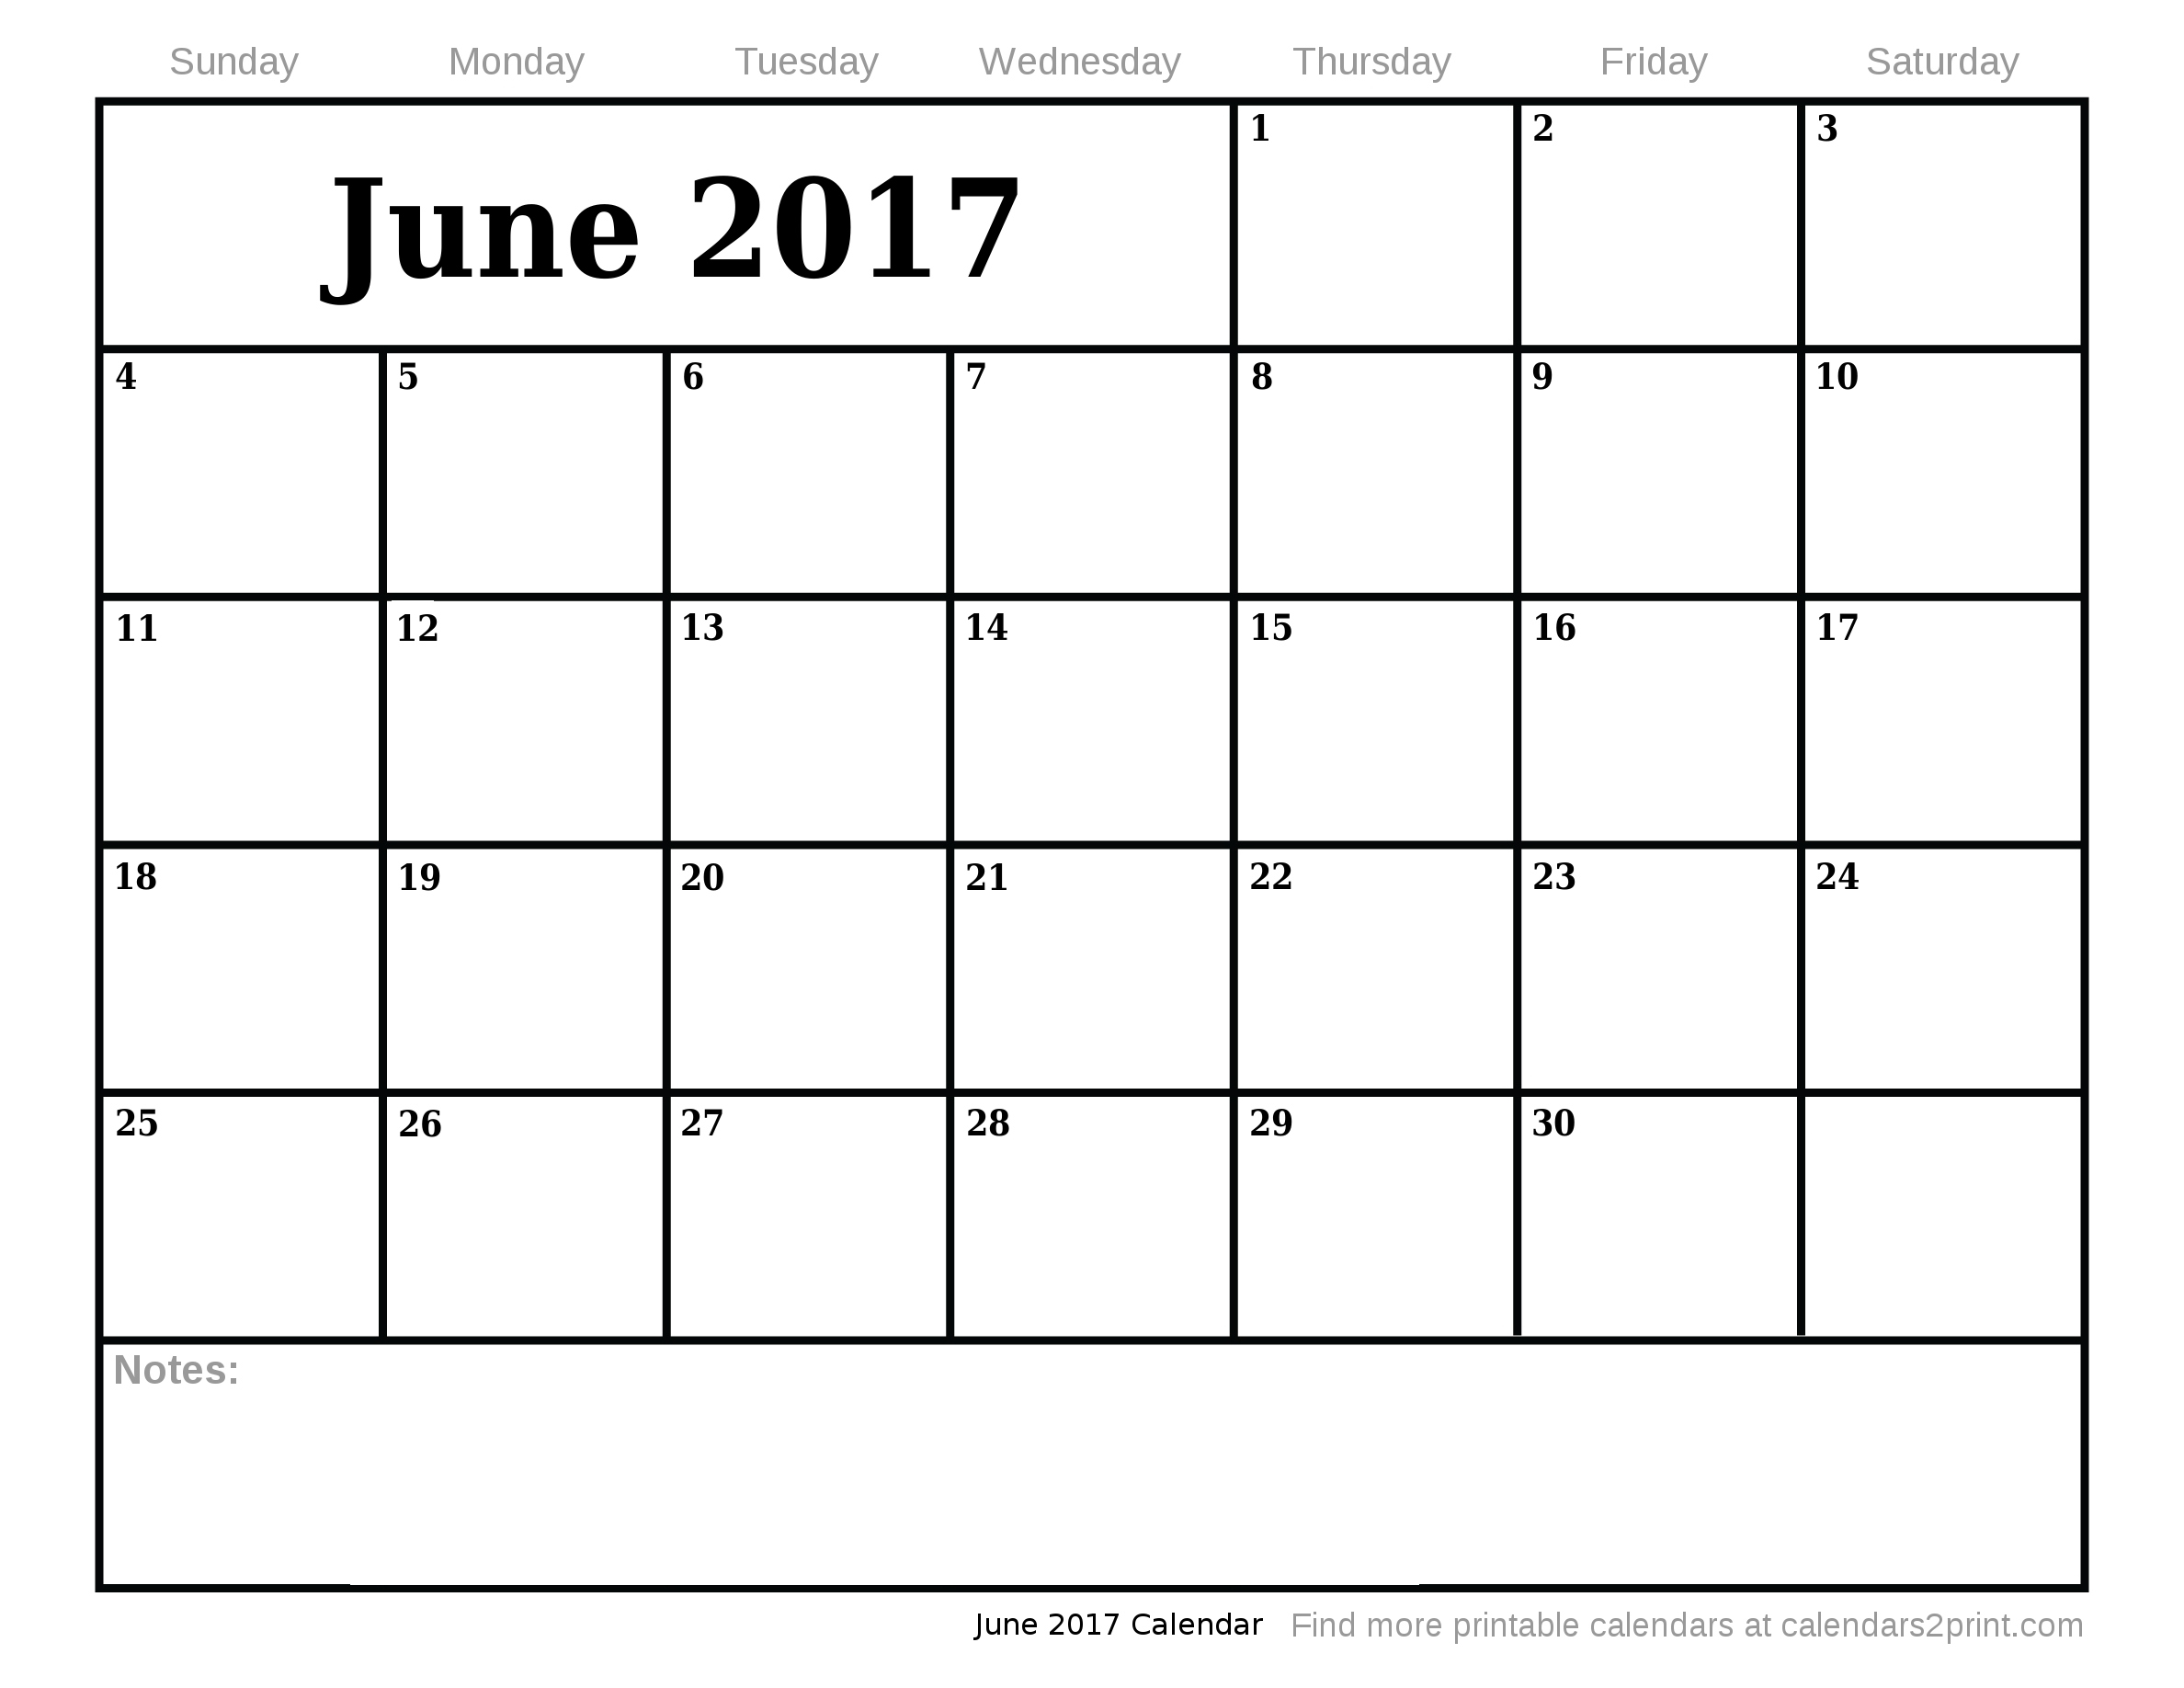 Jun 2017 Printable Calendar